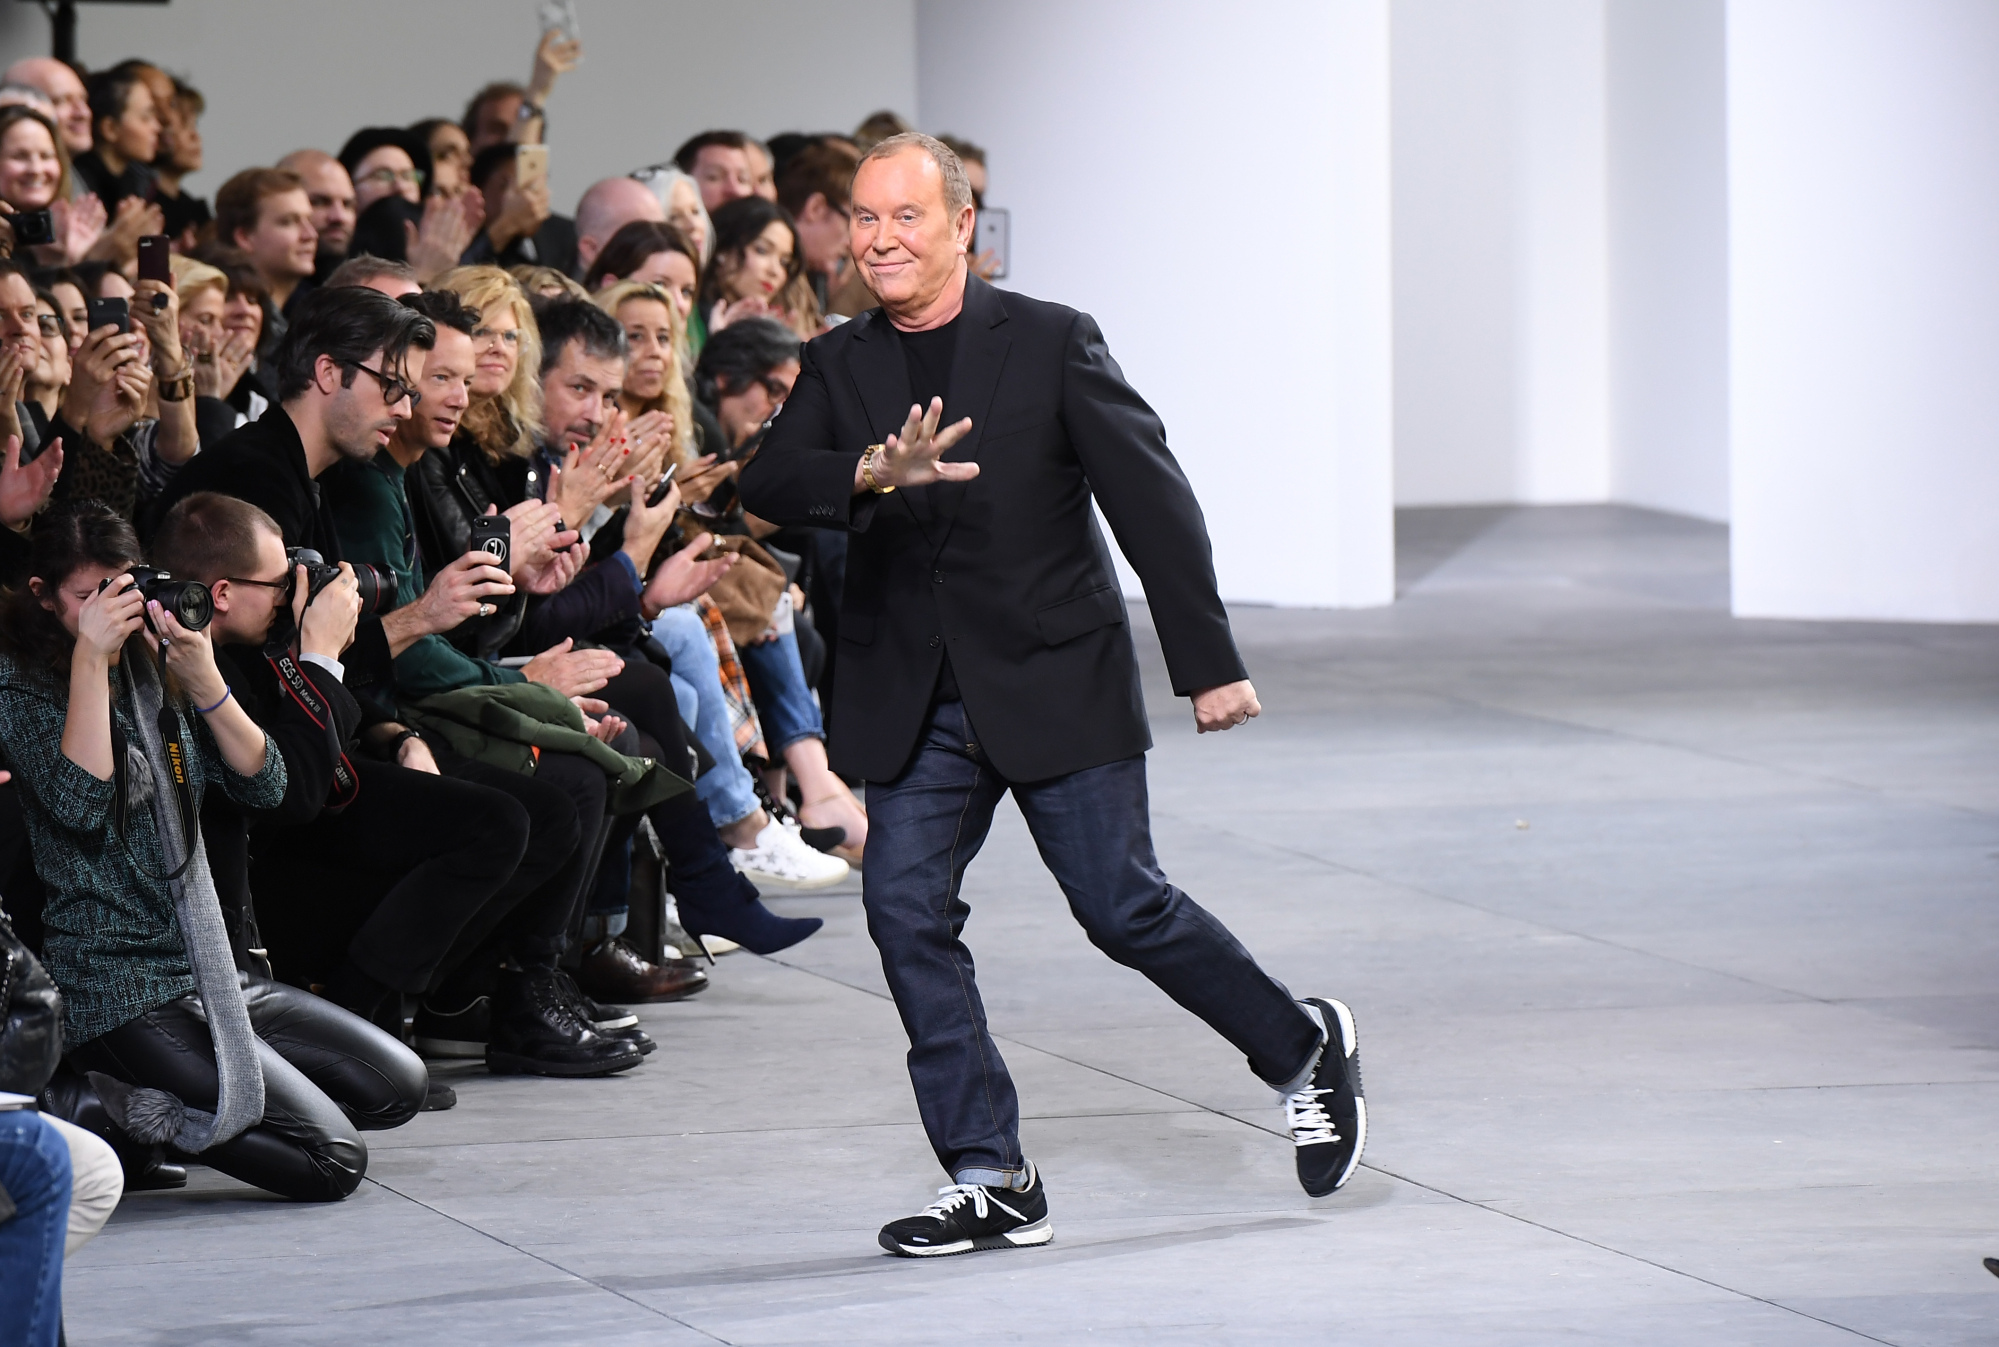 Planlagt leninismen 945 Michael Kors Buys Fashion Label Versace for $2.2 Billion - Bloomberg